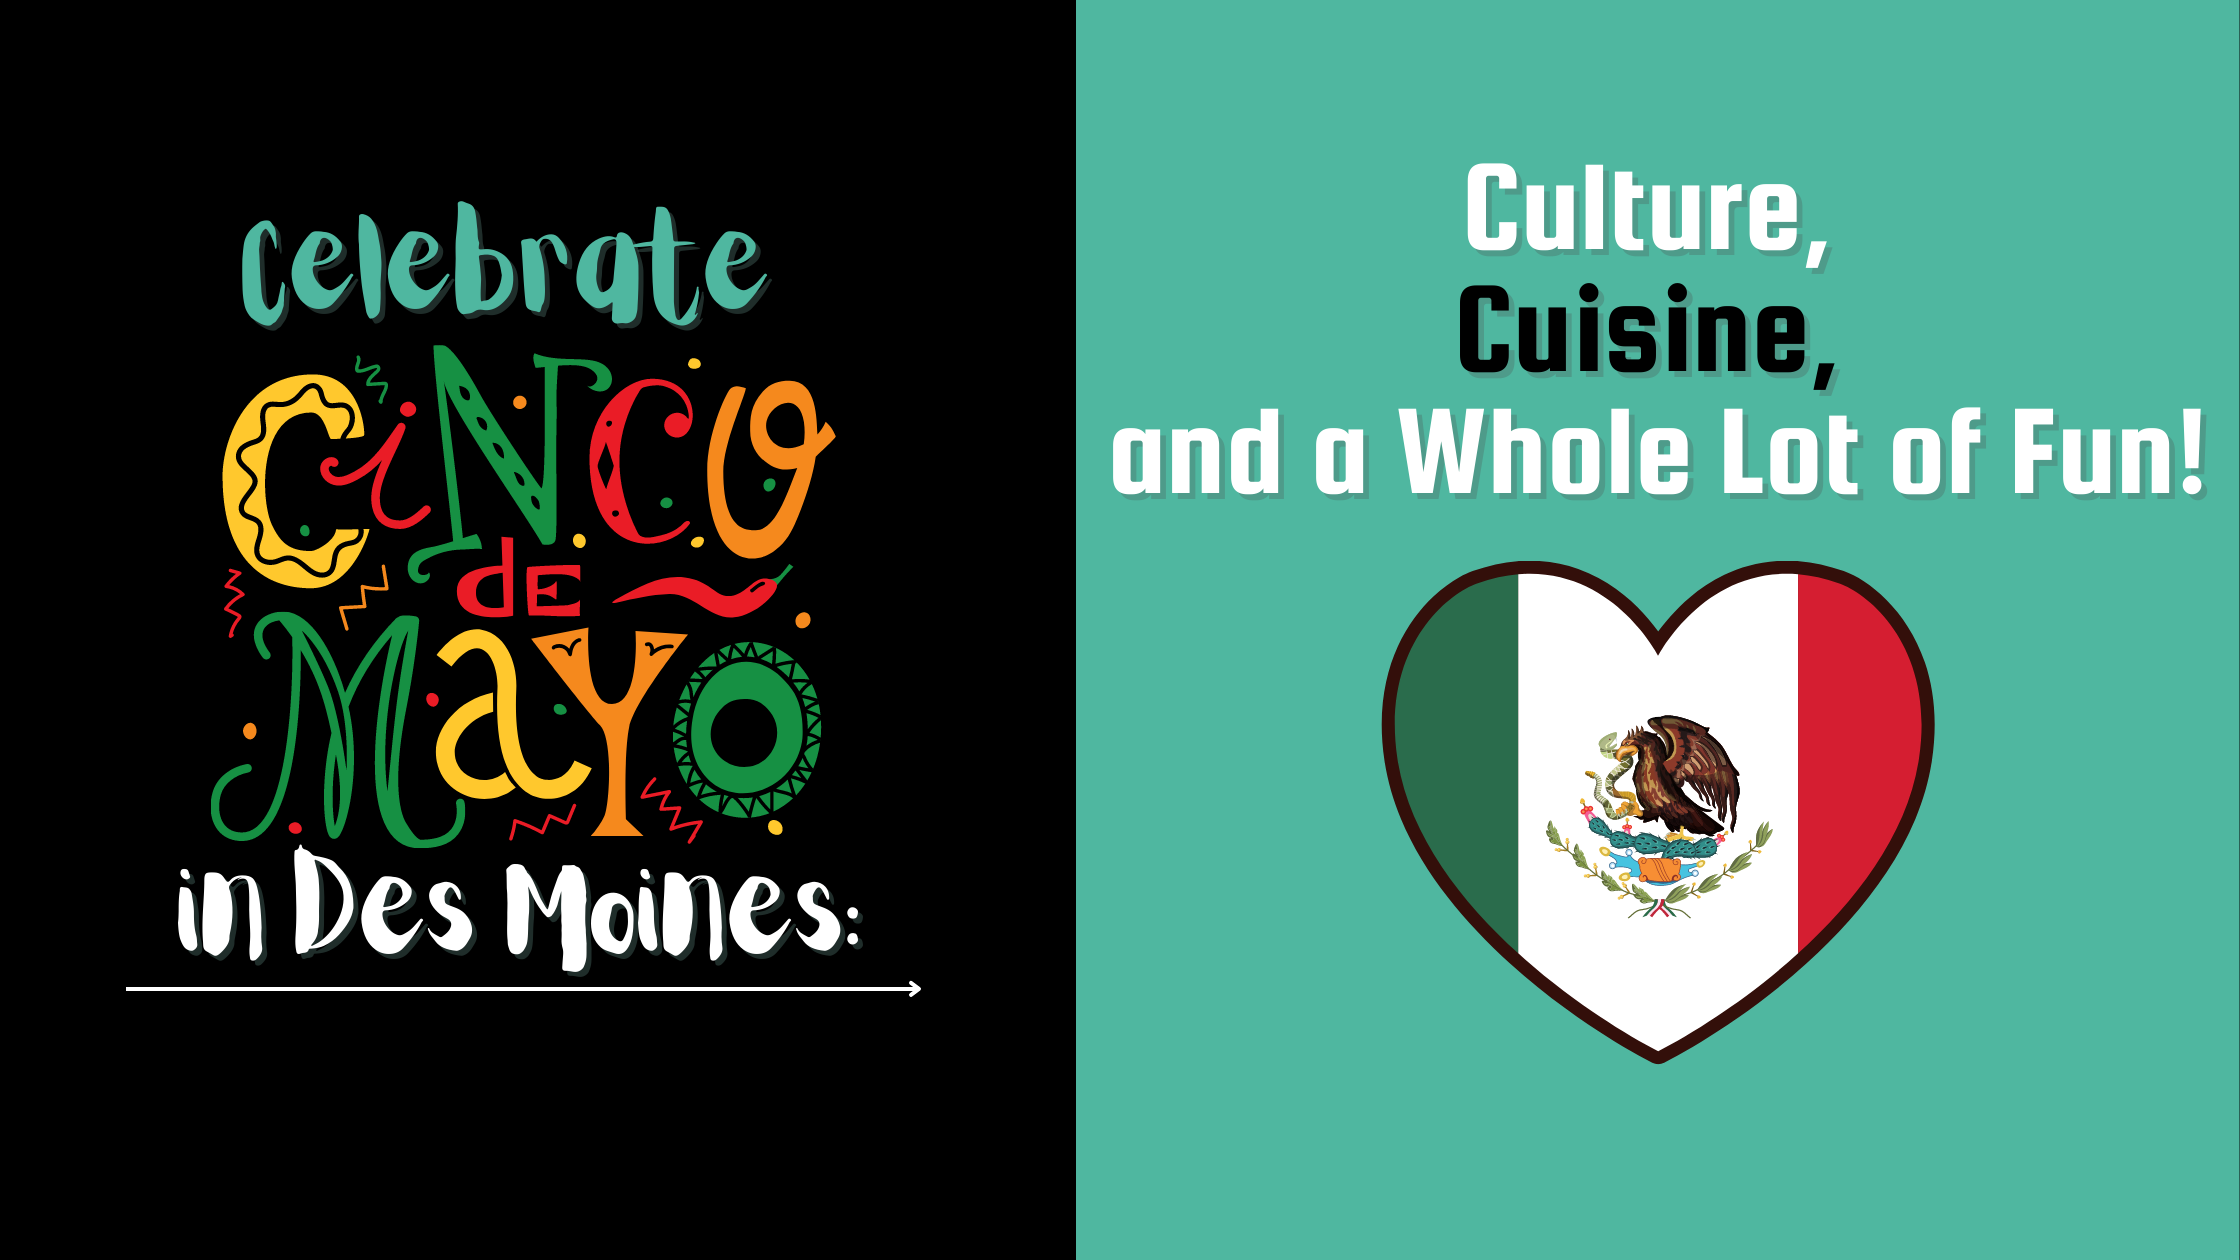 Celebrate Cinco De Mayo 2023 in Des Moines Culture, Cuisine, and a